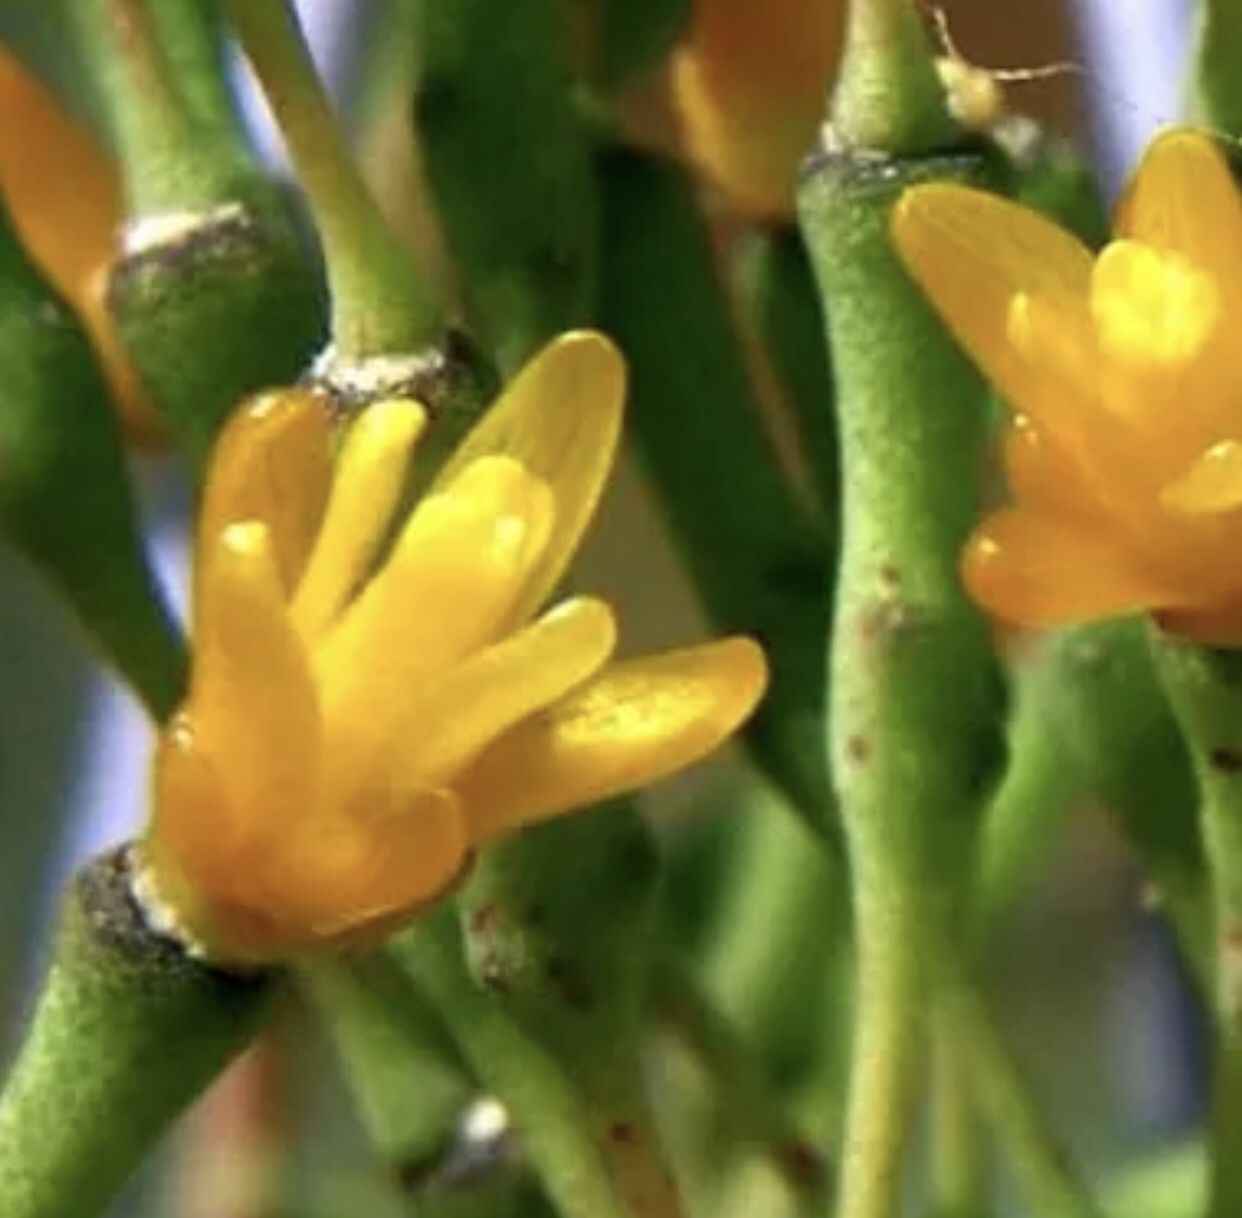 Phipsalis Capilliformis “ Dancing Bones” Cactus In Plactic Pot 3"H. Has Yellow Flowers In Winter.